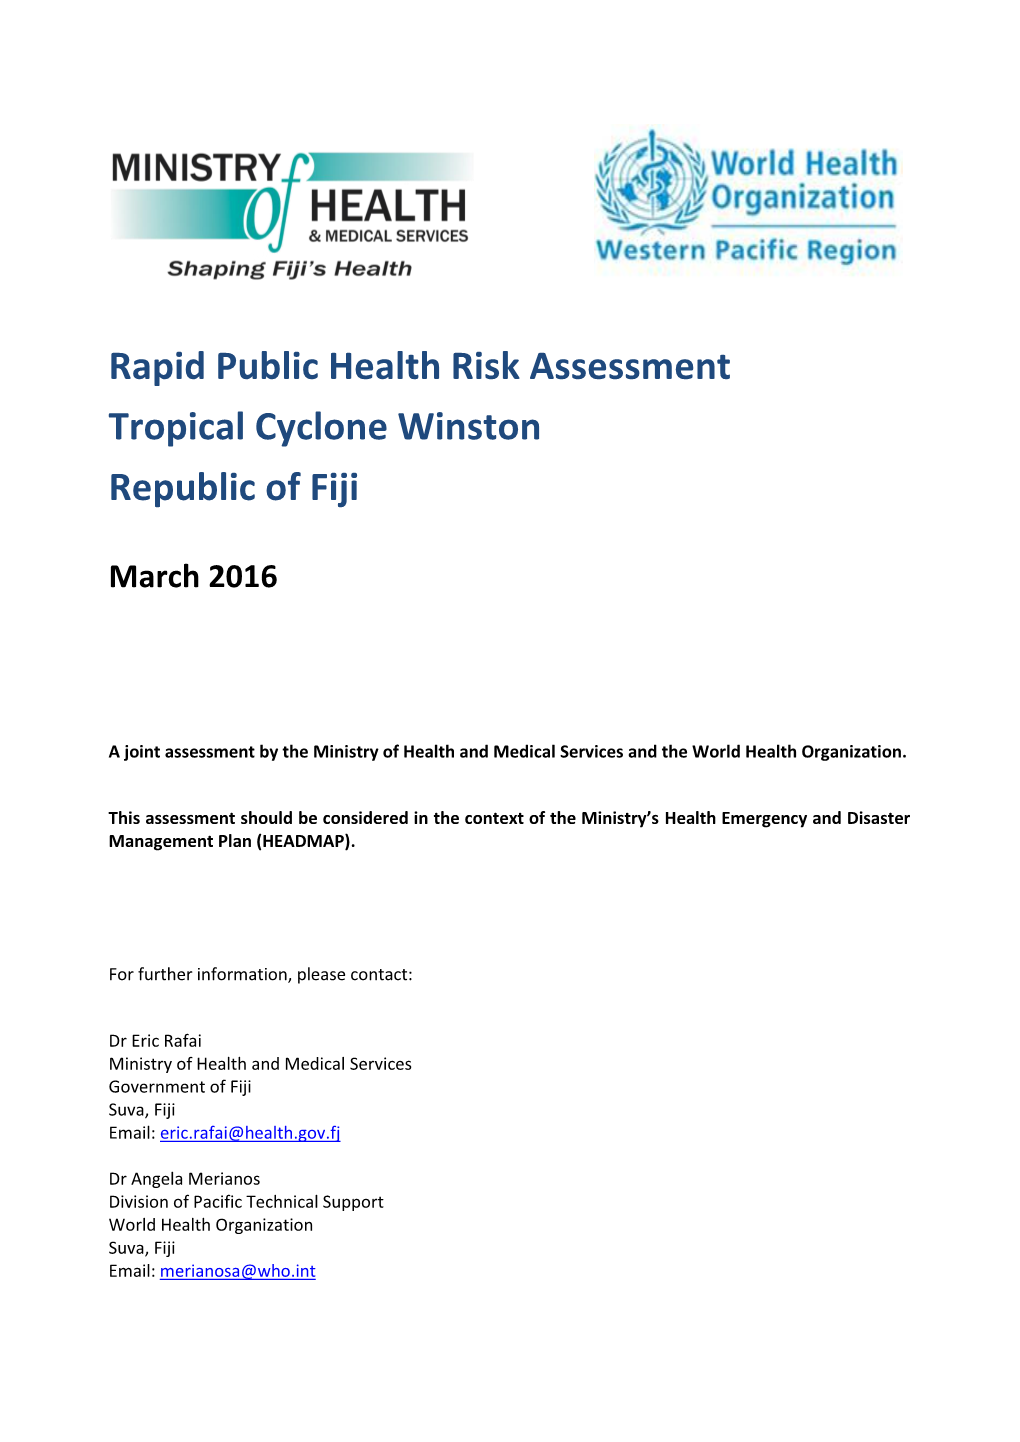 Rapid Public Health Risk Assessment Tropical Cyclone Winston Republic of Fiji